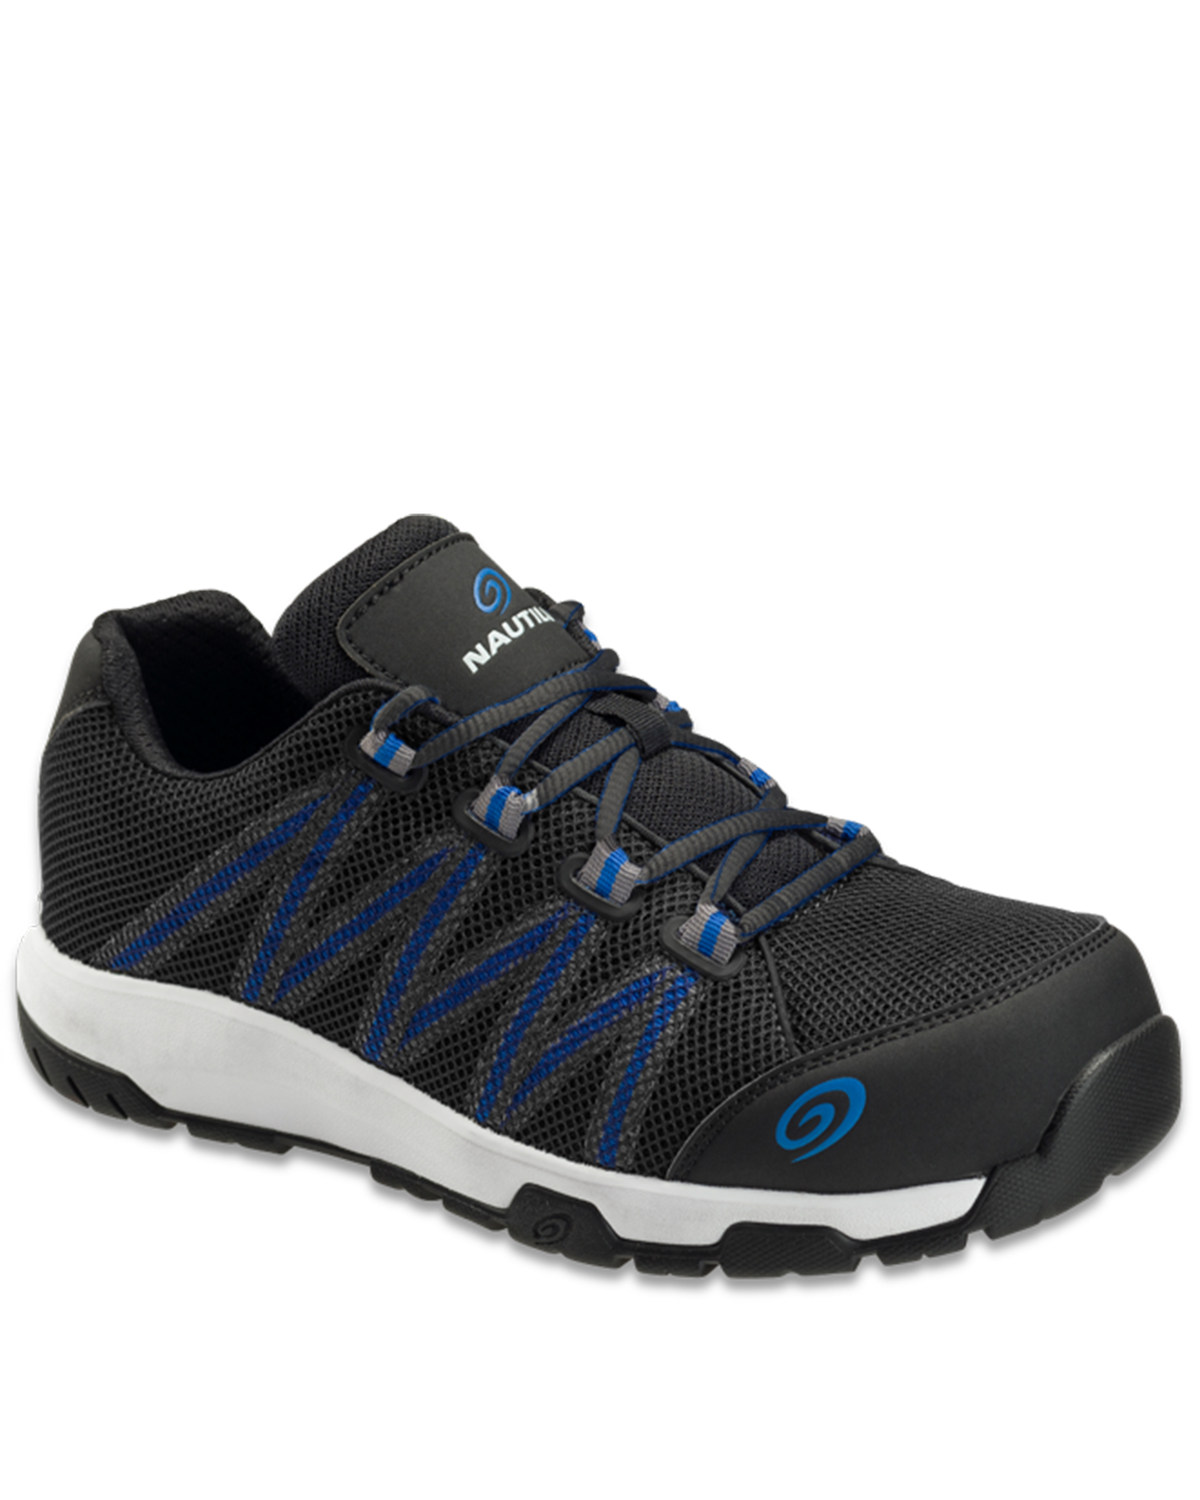 Nautilus Men's Accelerator Work Shoes - Composite Toe